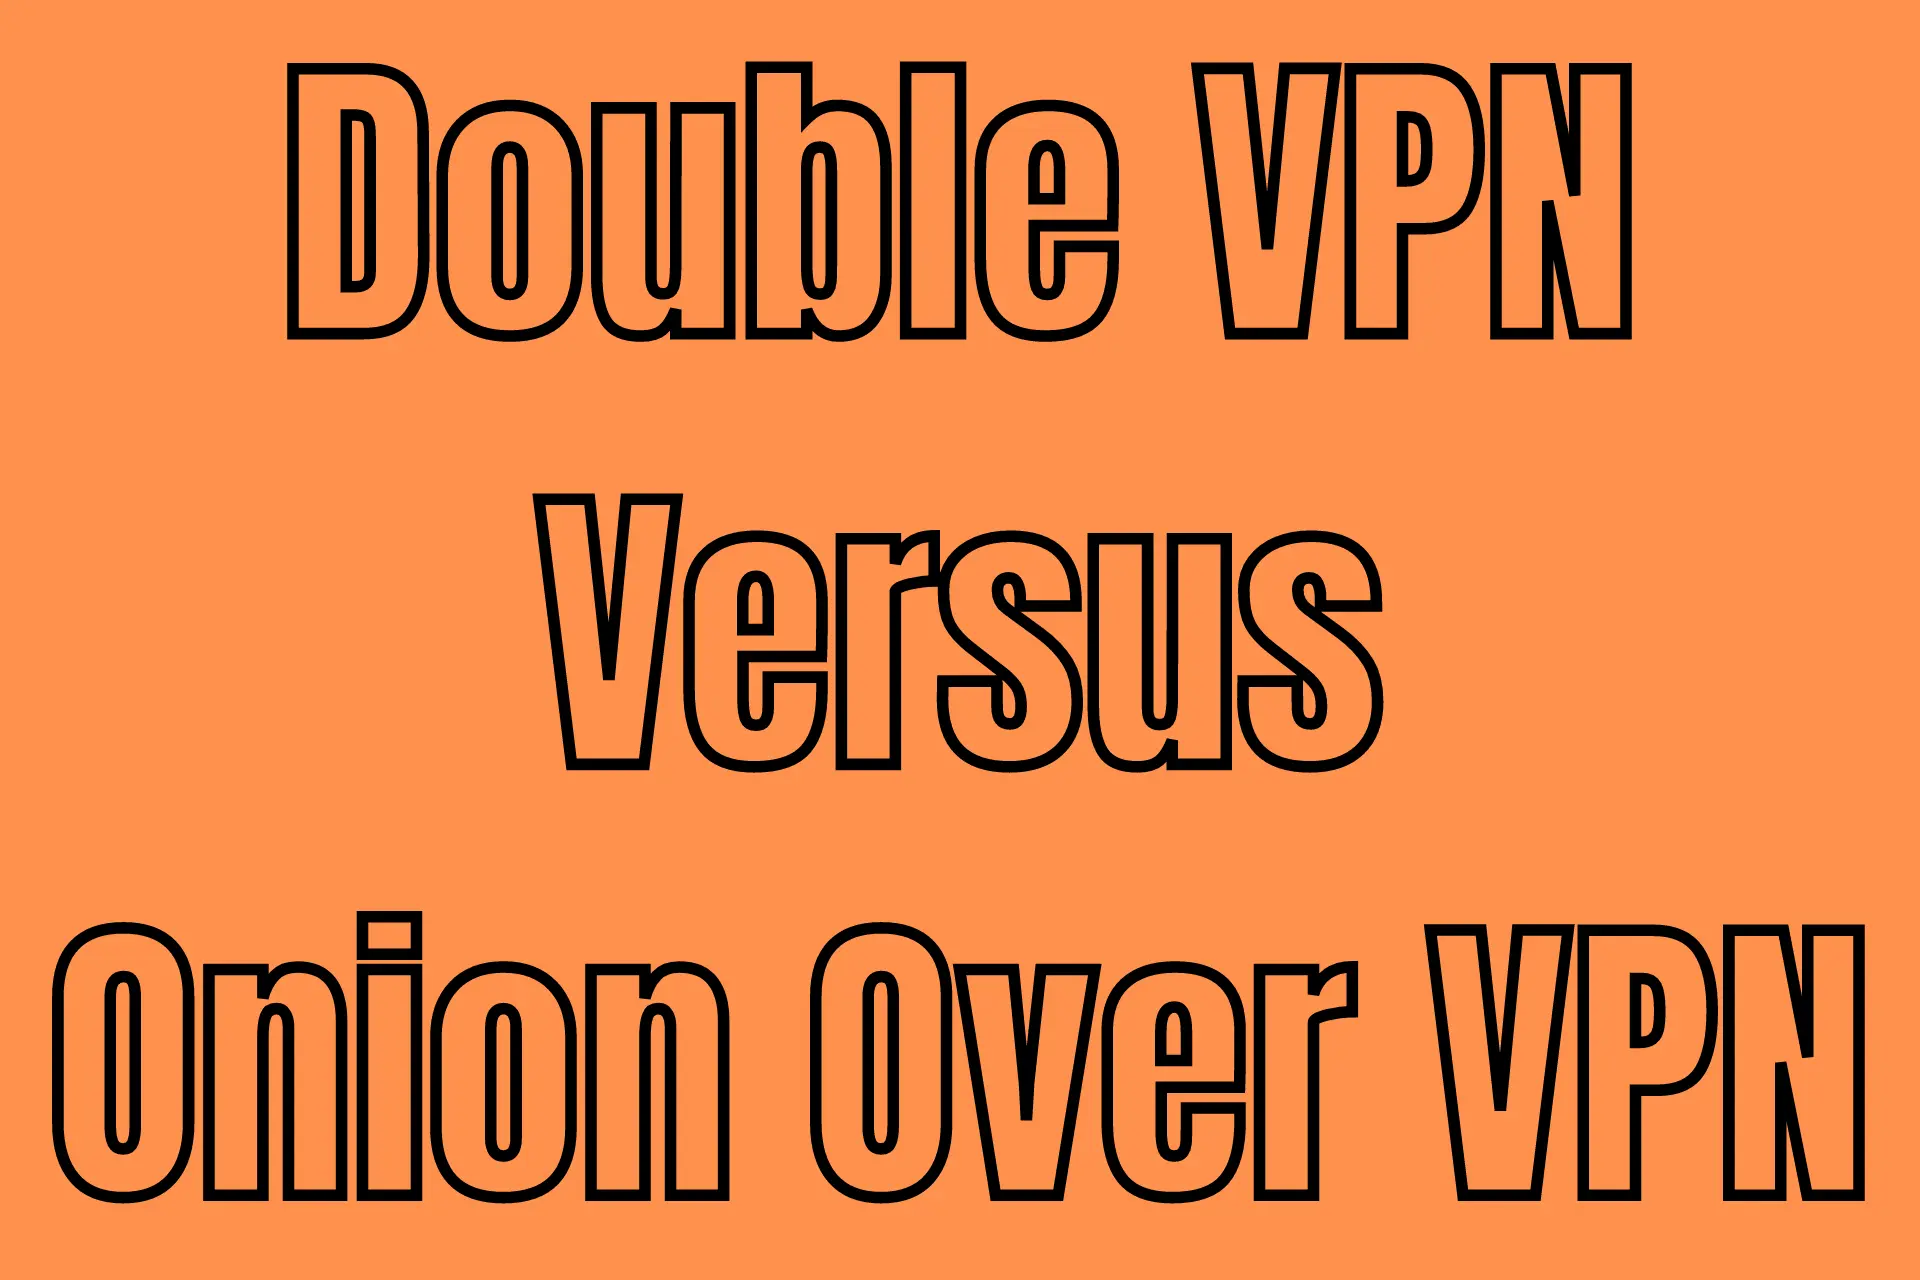 Double VPN over Onion over VPN